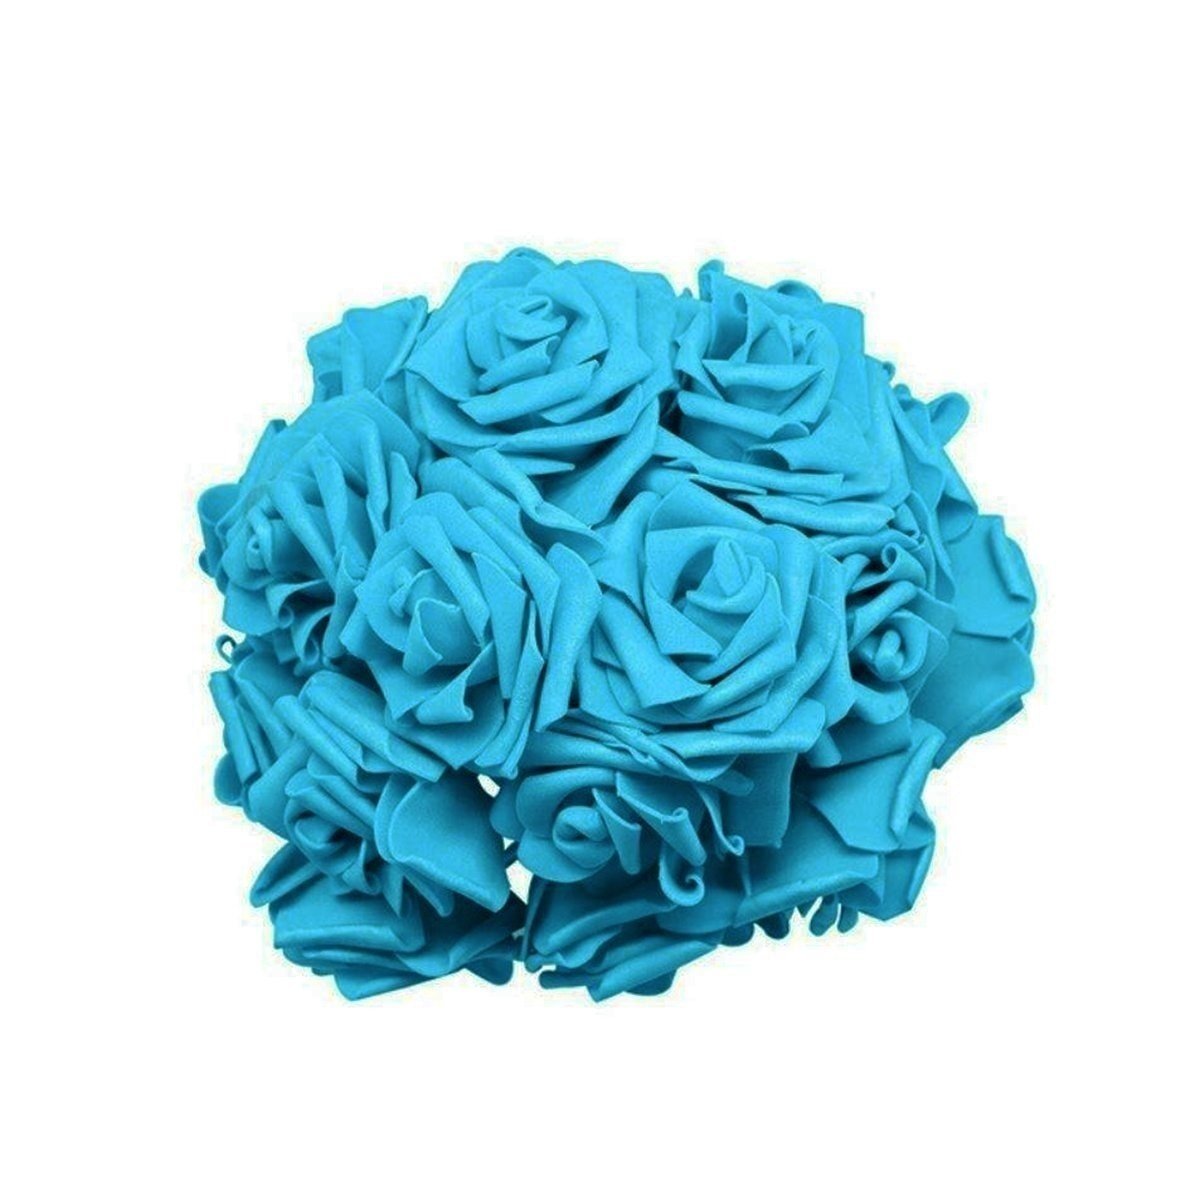 20pcs 8cm Artificial Flowers Foam Rose Fake Bride Bouquet Wedding - Cyan/Blue - - Asia Sell